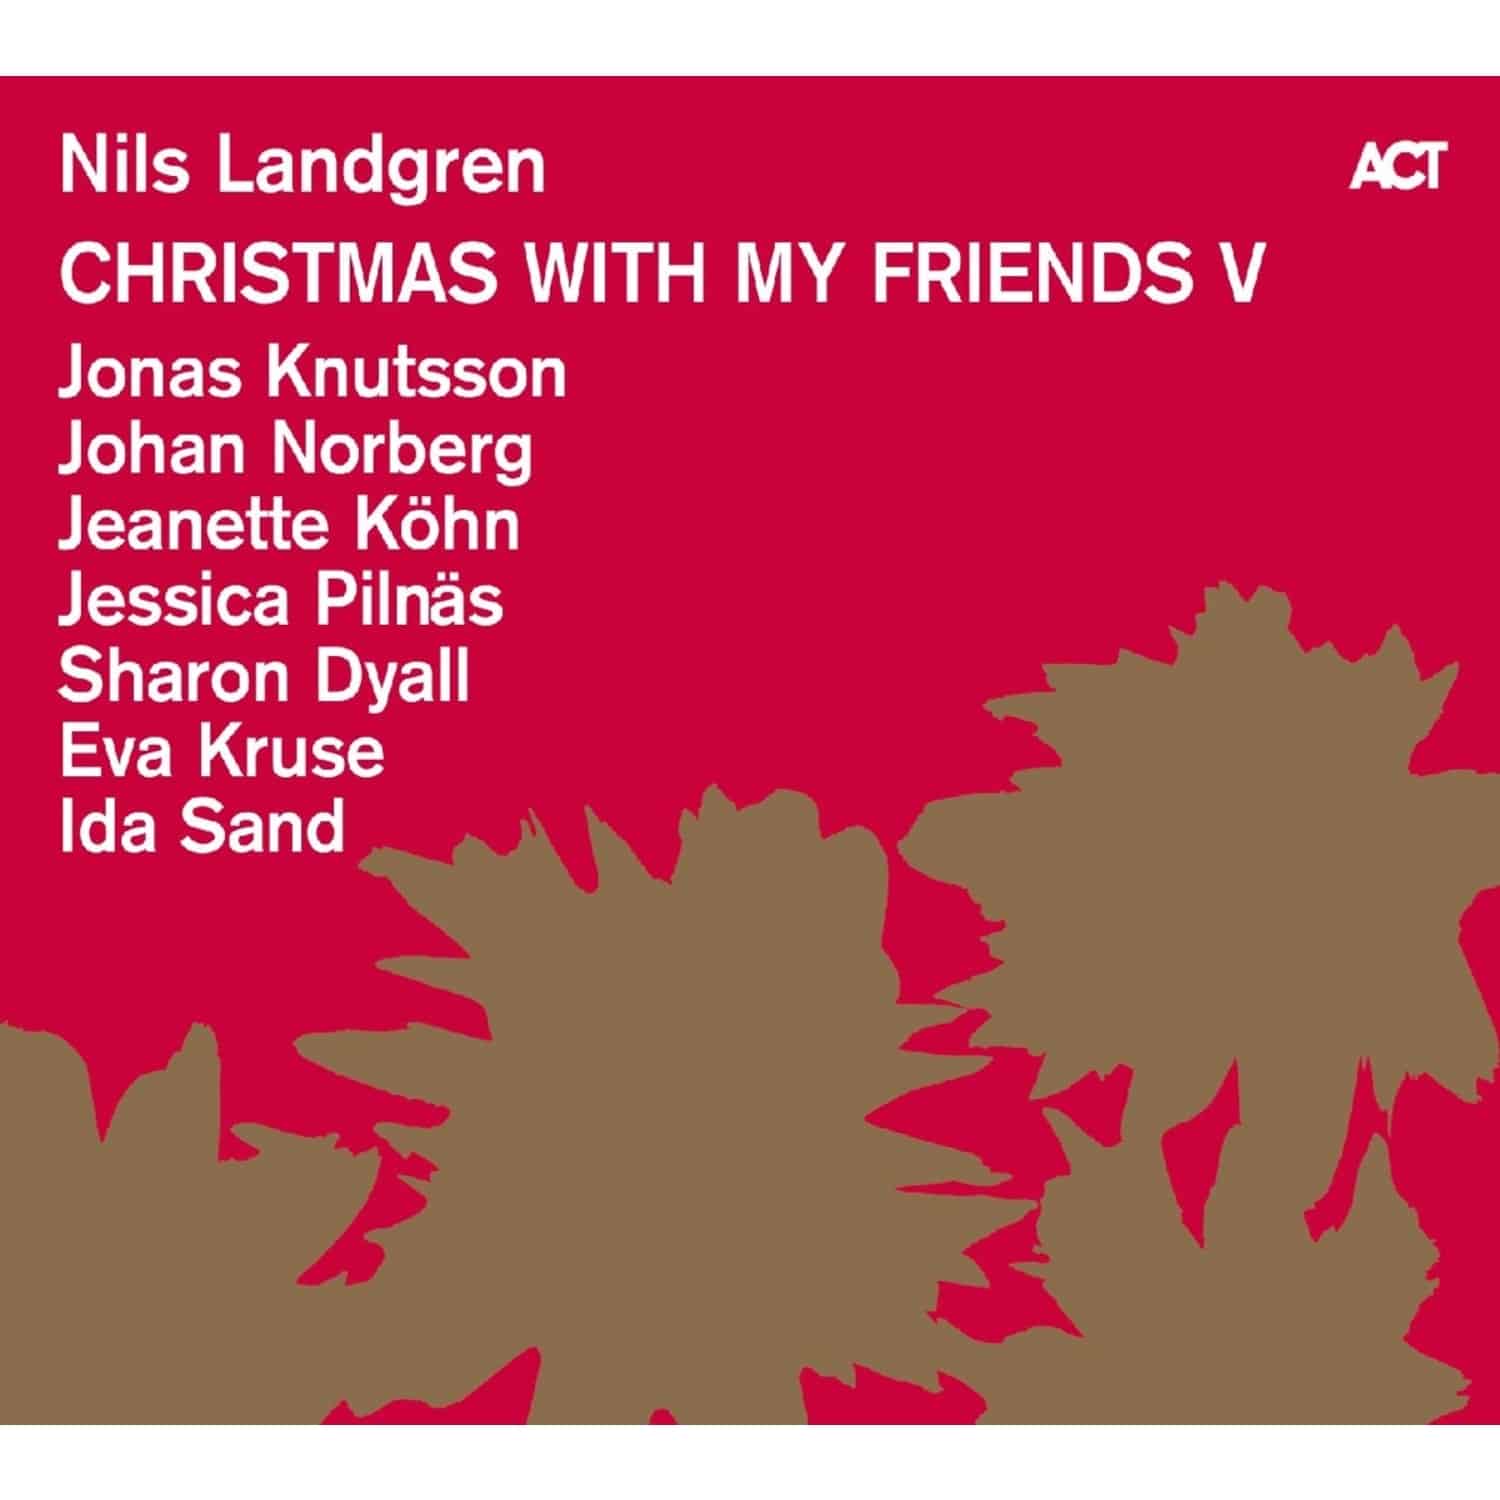 Nils Landgren - CHRISTMAS WITH MY FRIENDS V 